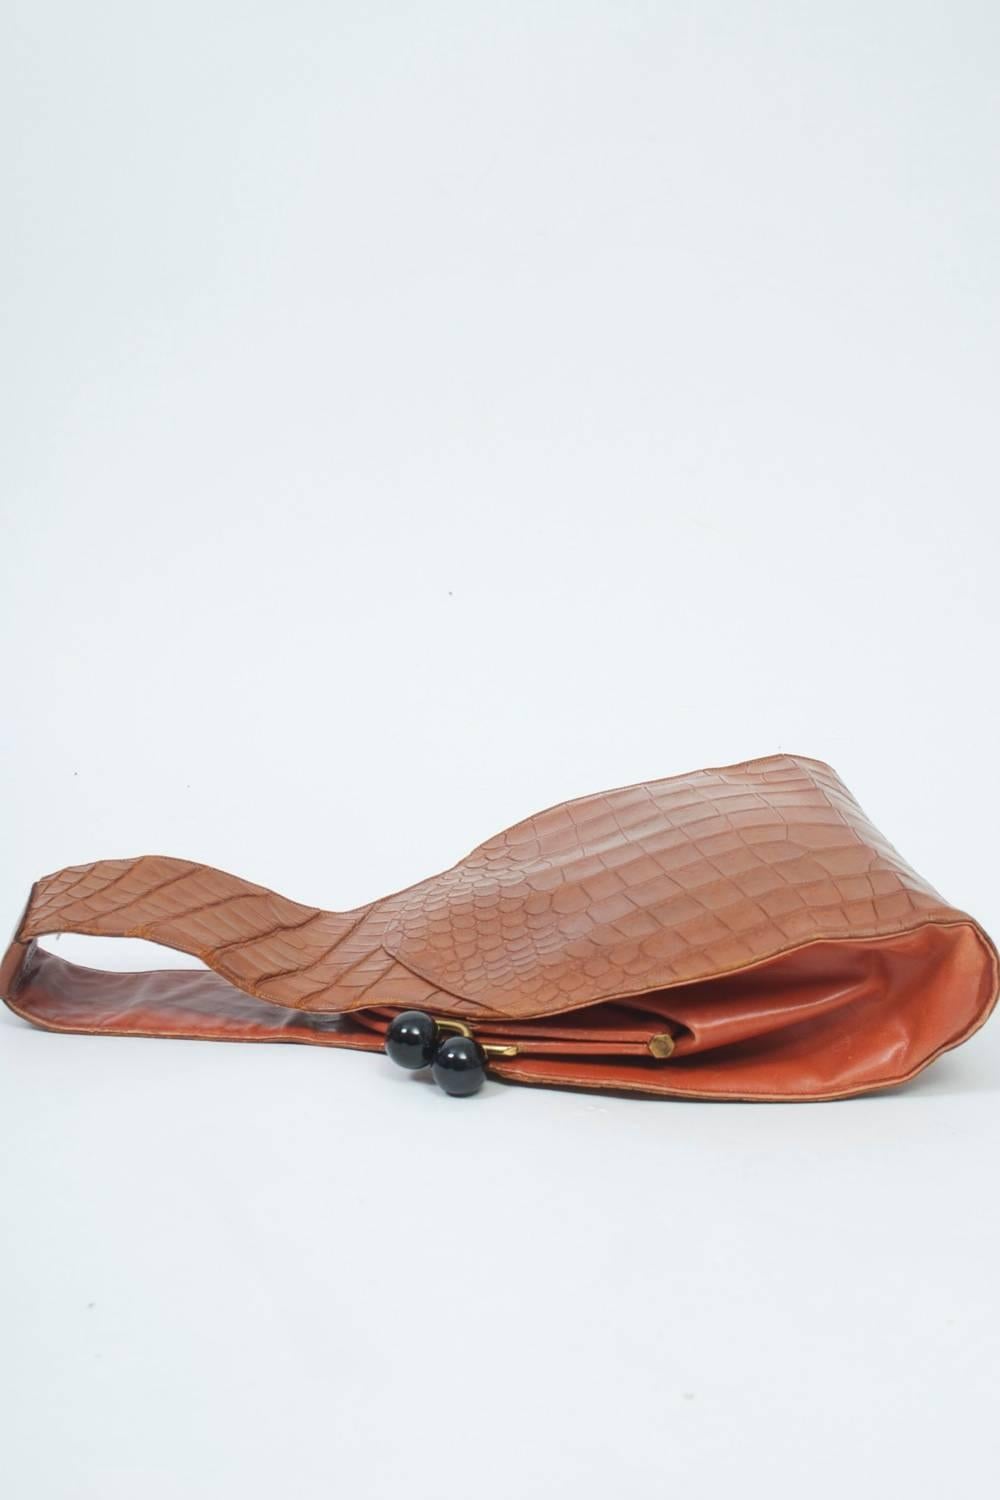 Women's Koret Croc Wrist Handbag